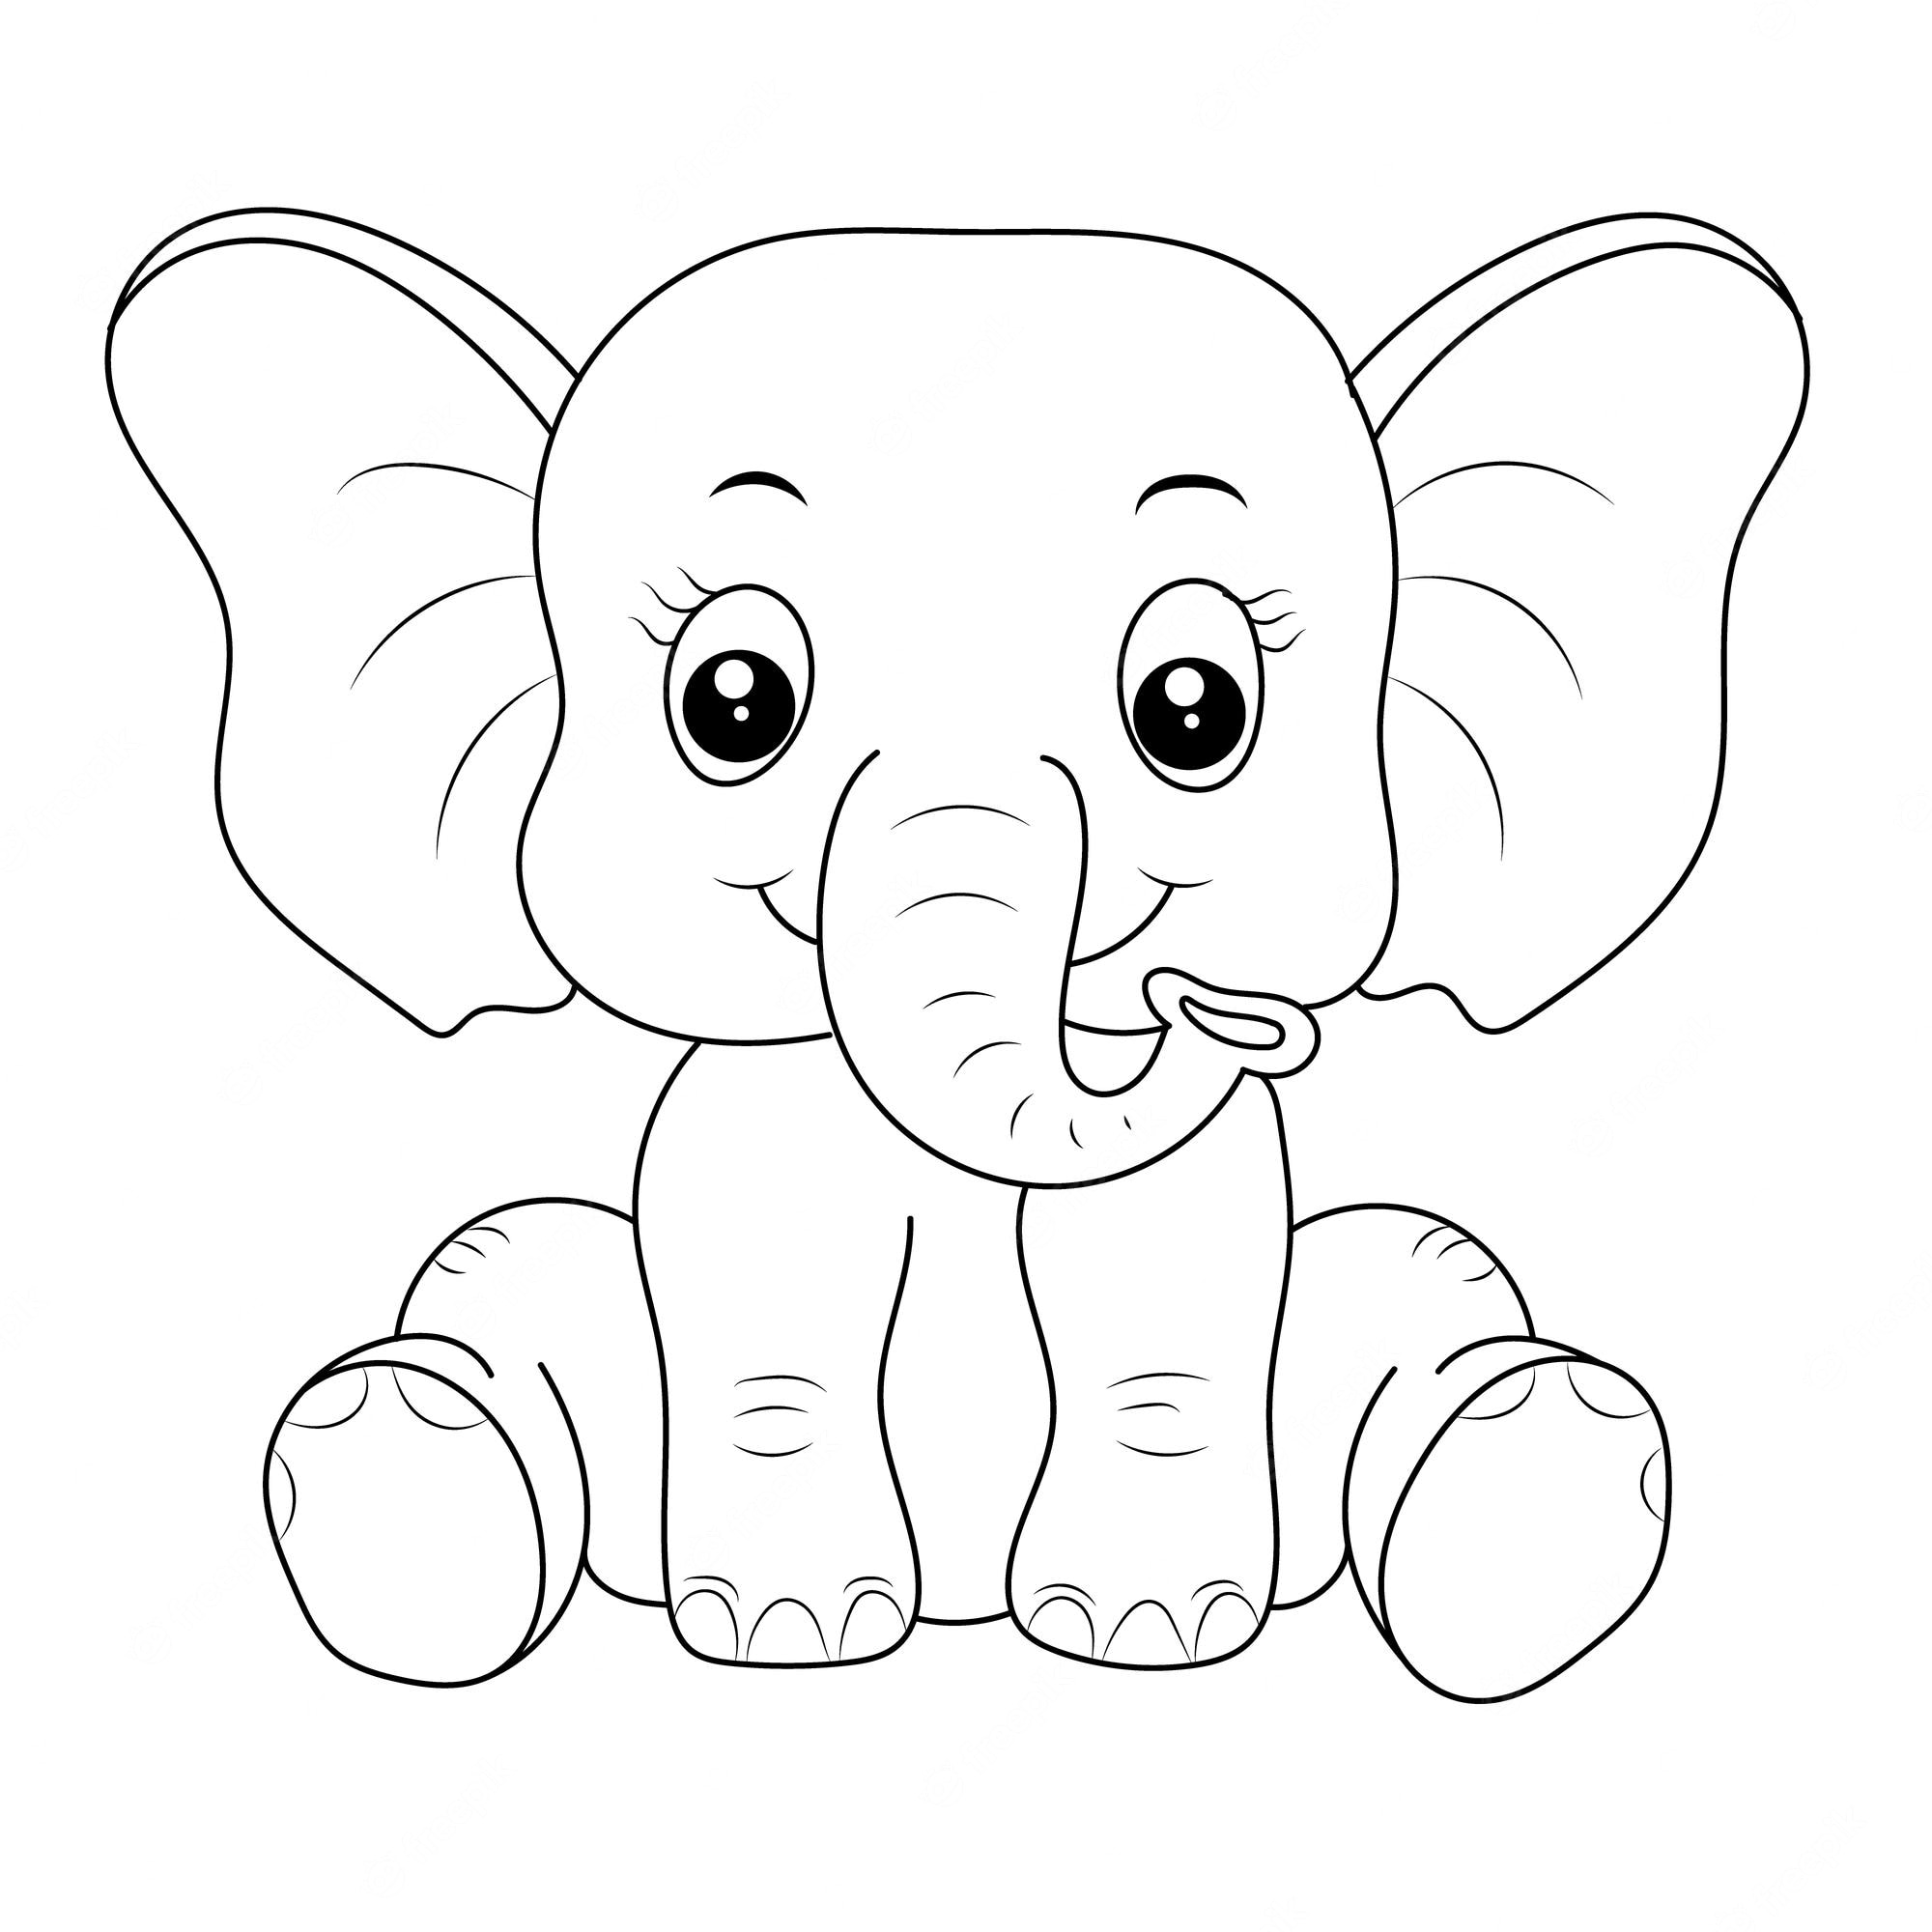 Elephant coloring page for kids - SheetalColor.com